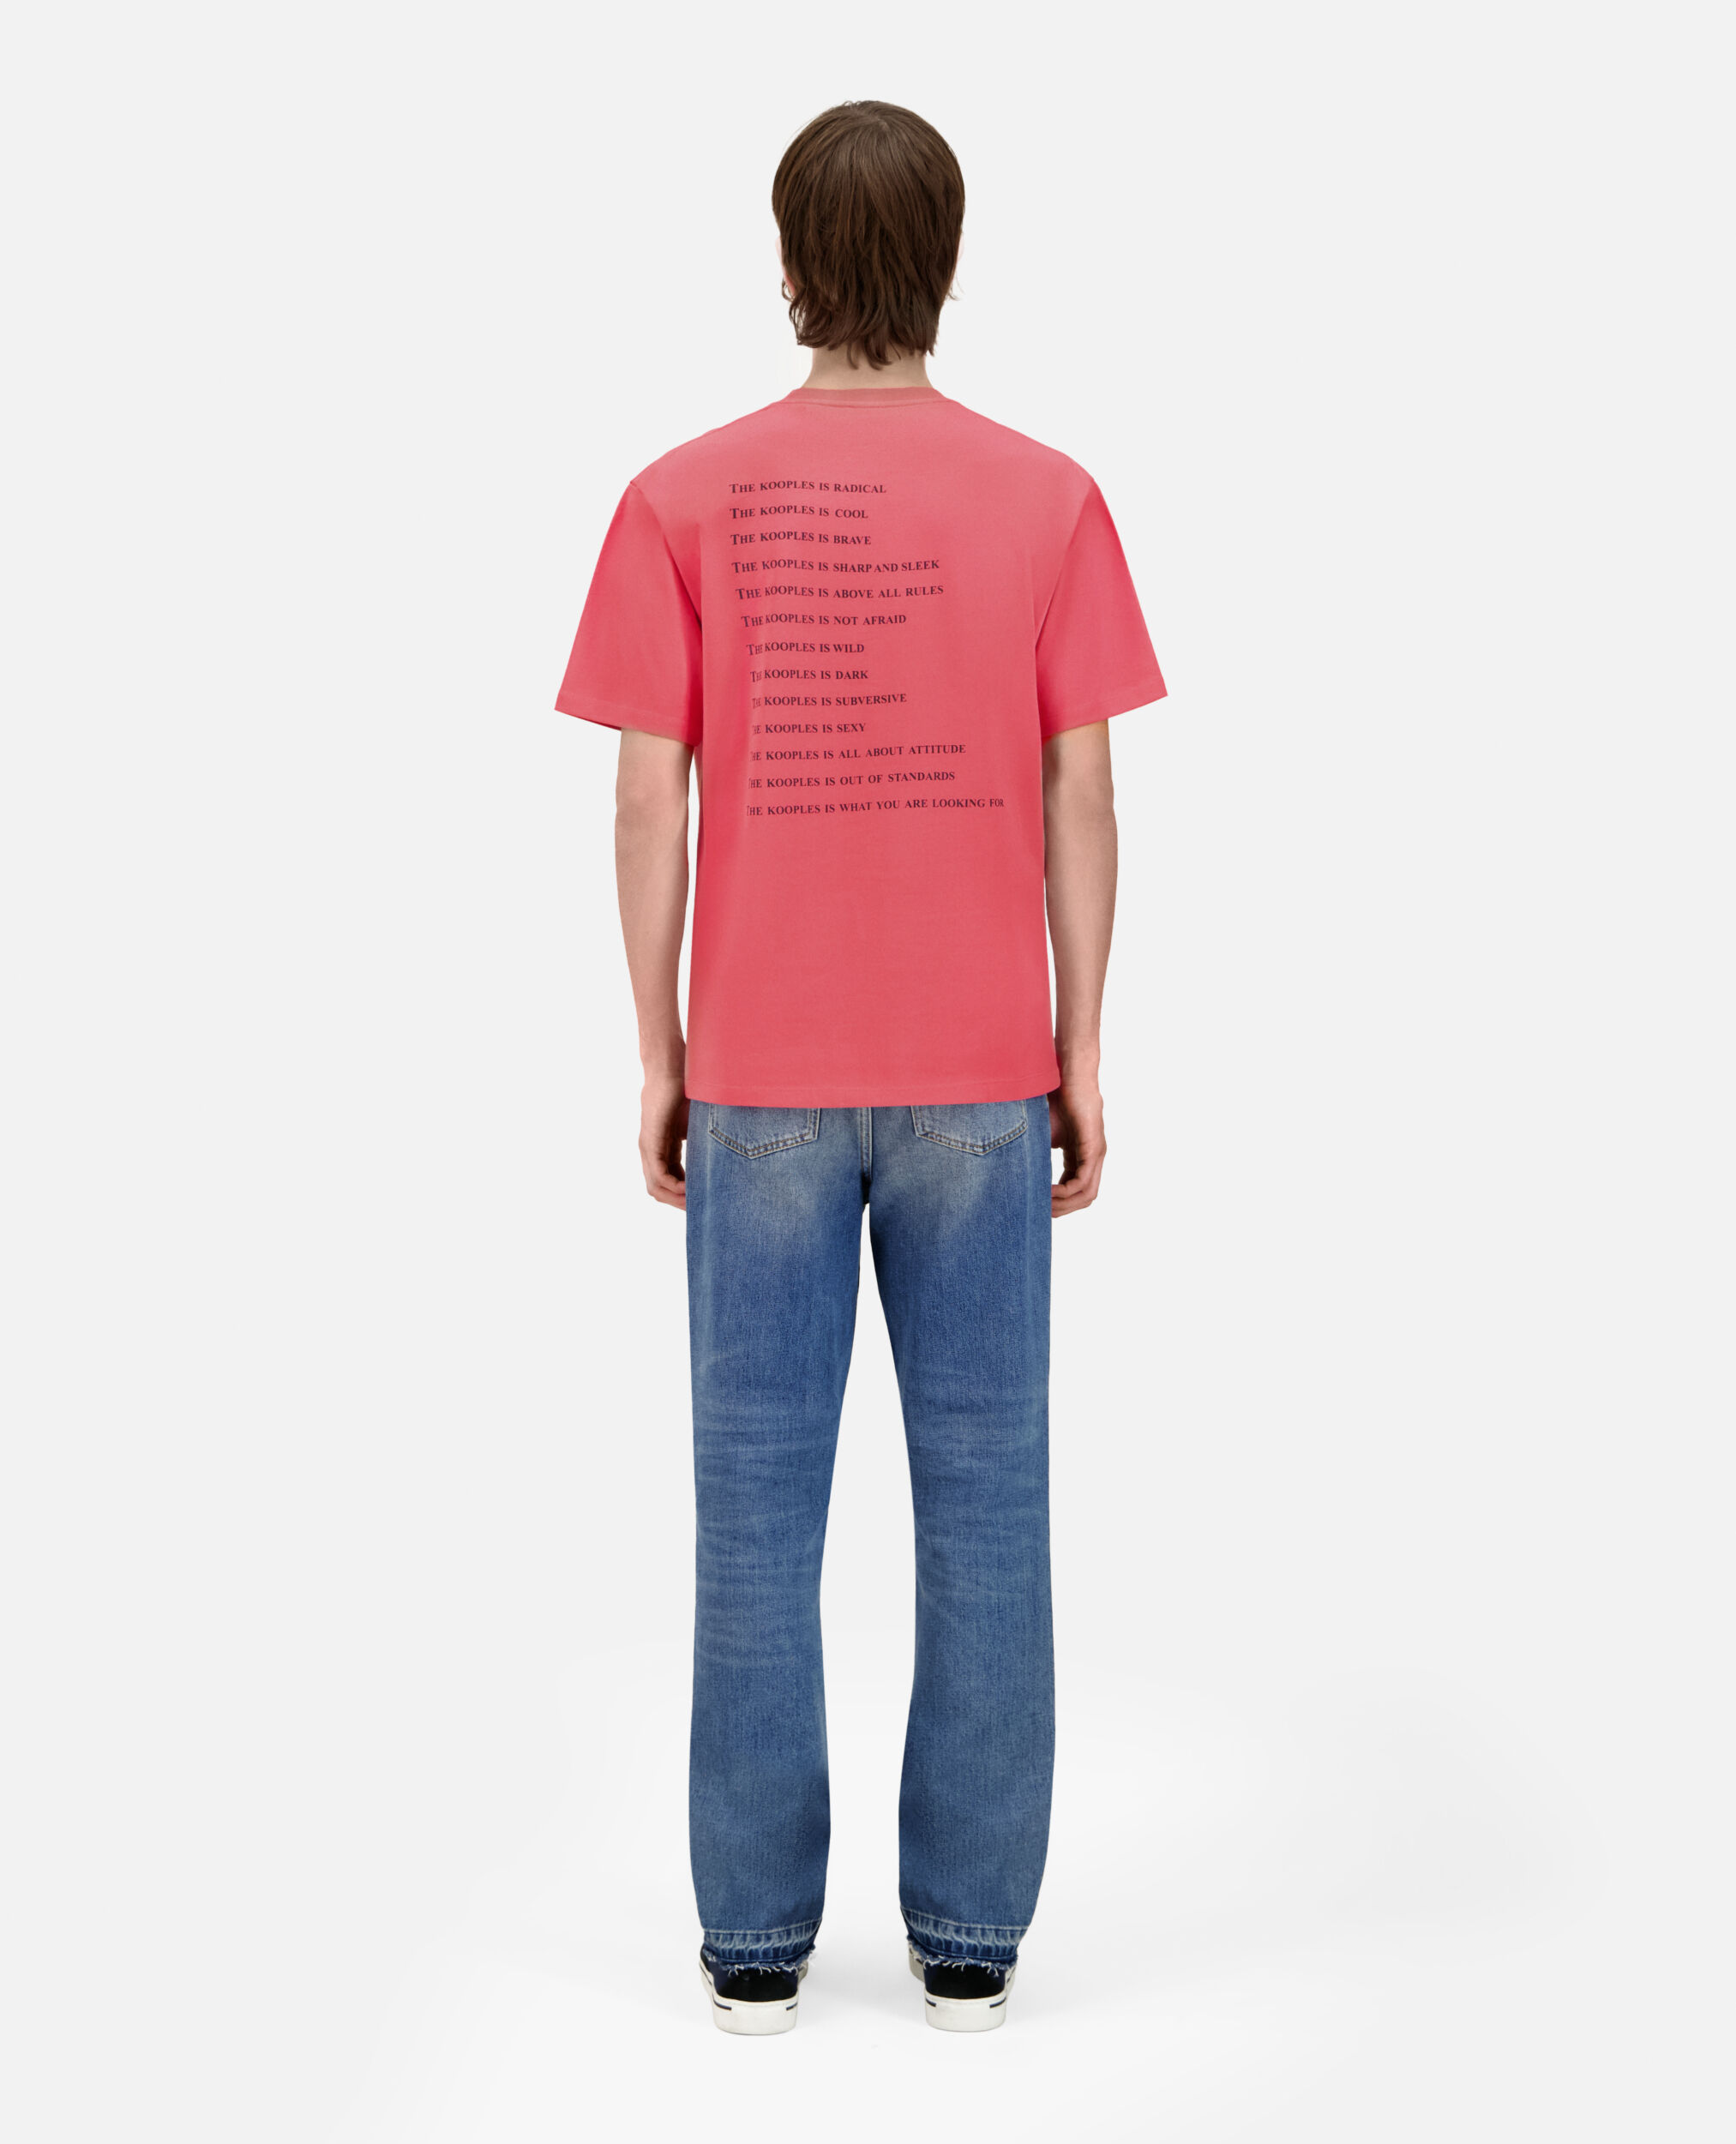 Camiseta What is rosa, RETRO PINK, hi-res image number null